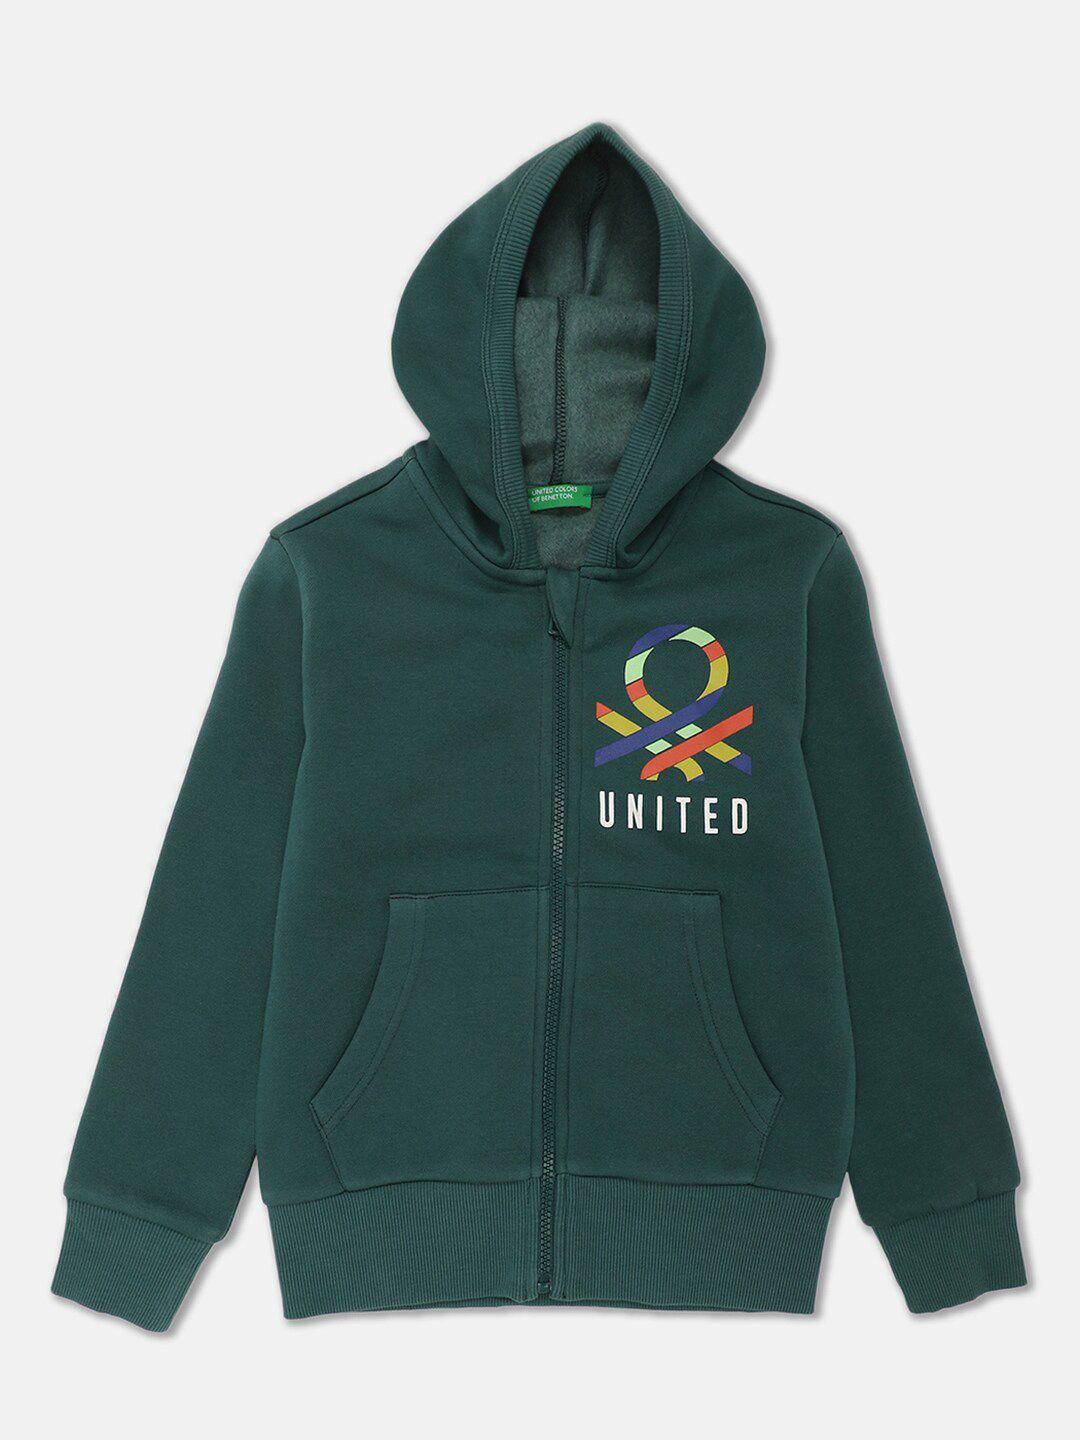 united colors of benetton boys teal hooded sweatshirt